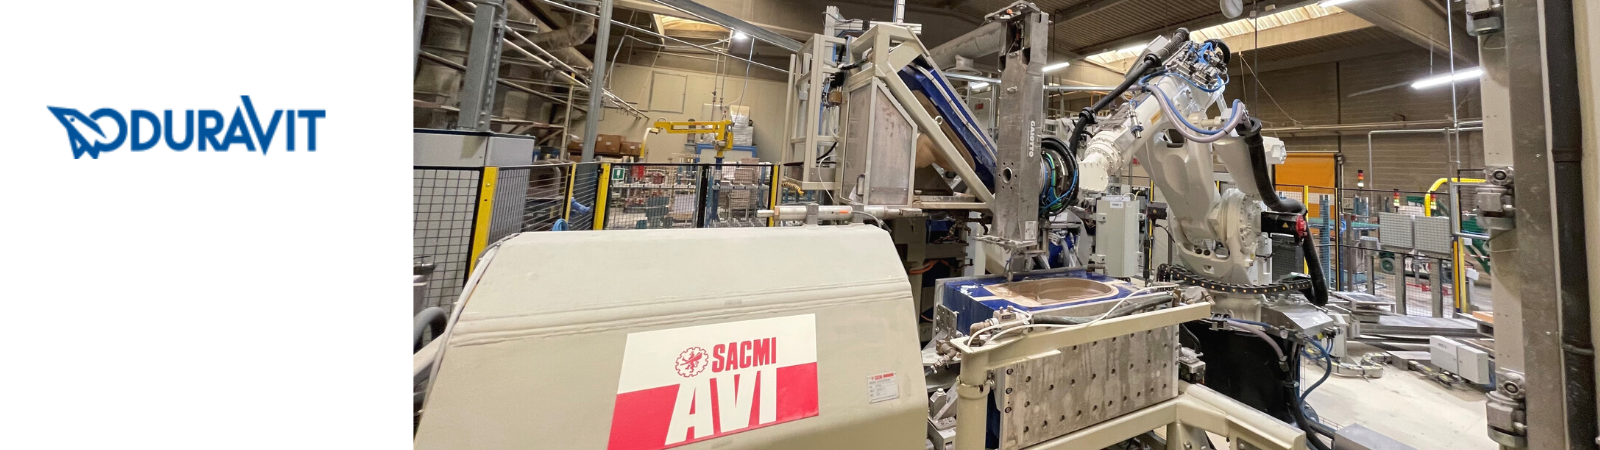 Duravit France chooses the SACMI AVI Concept, international benchmark in Sanitaryware casting 